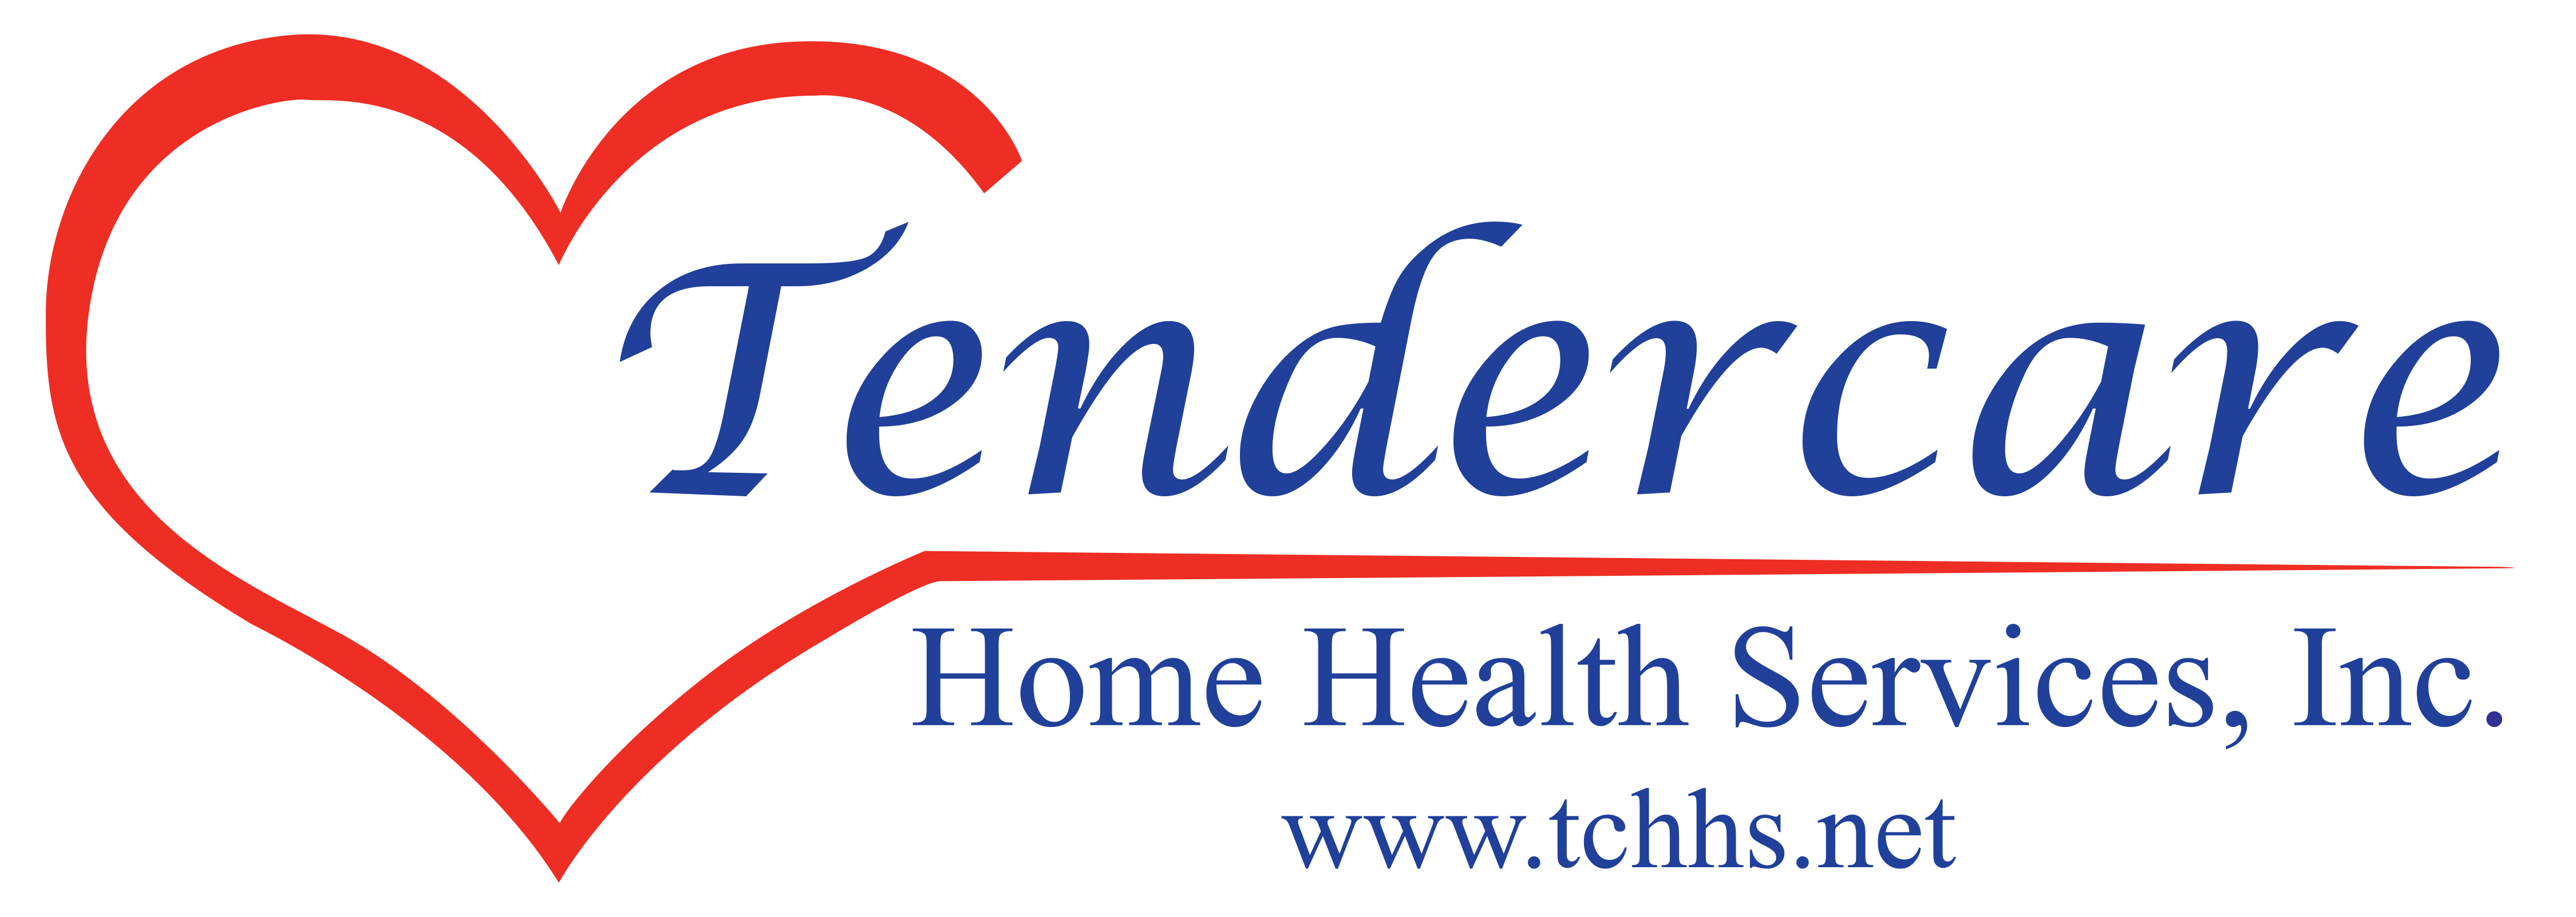 Tendercare Home Health Service, Inc. Company Logo